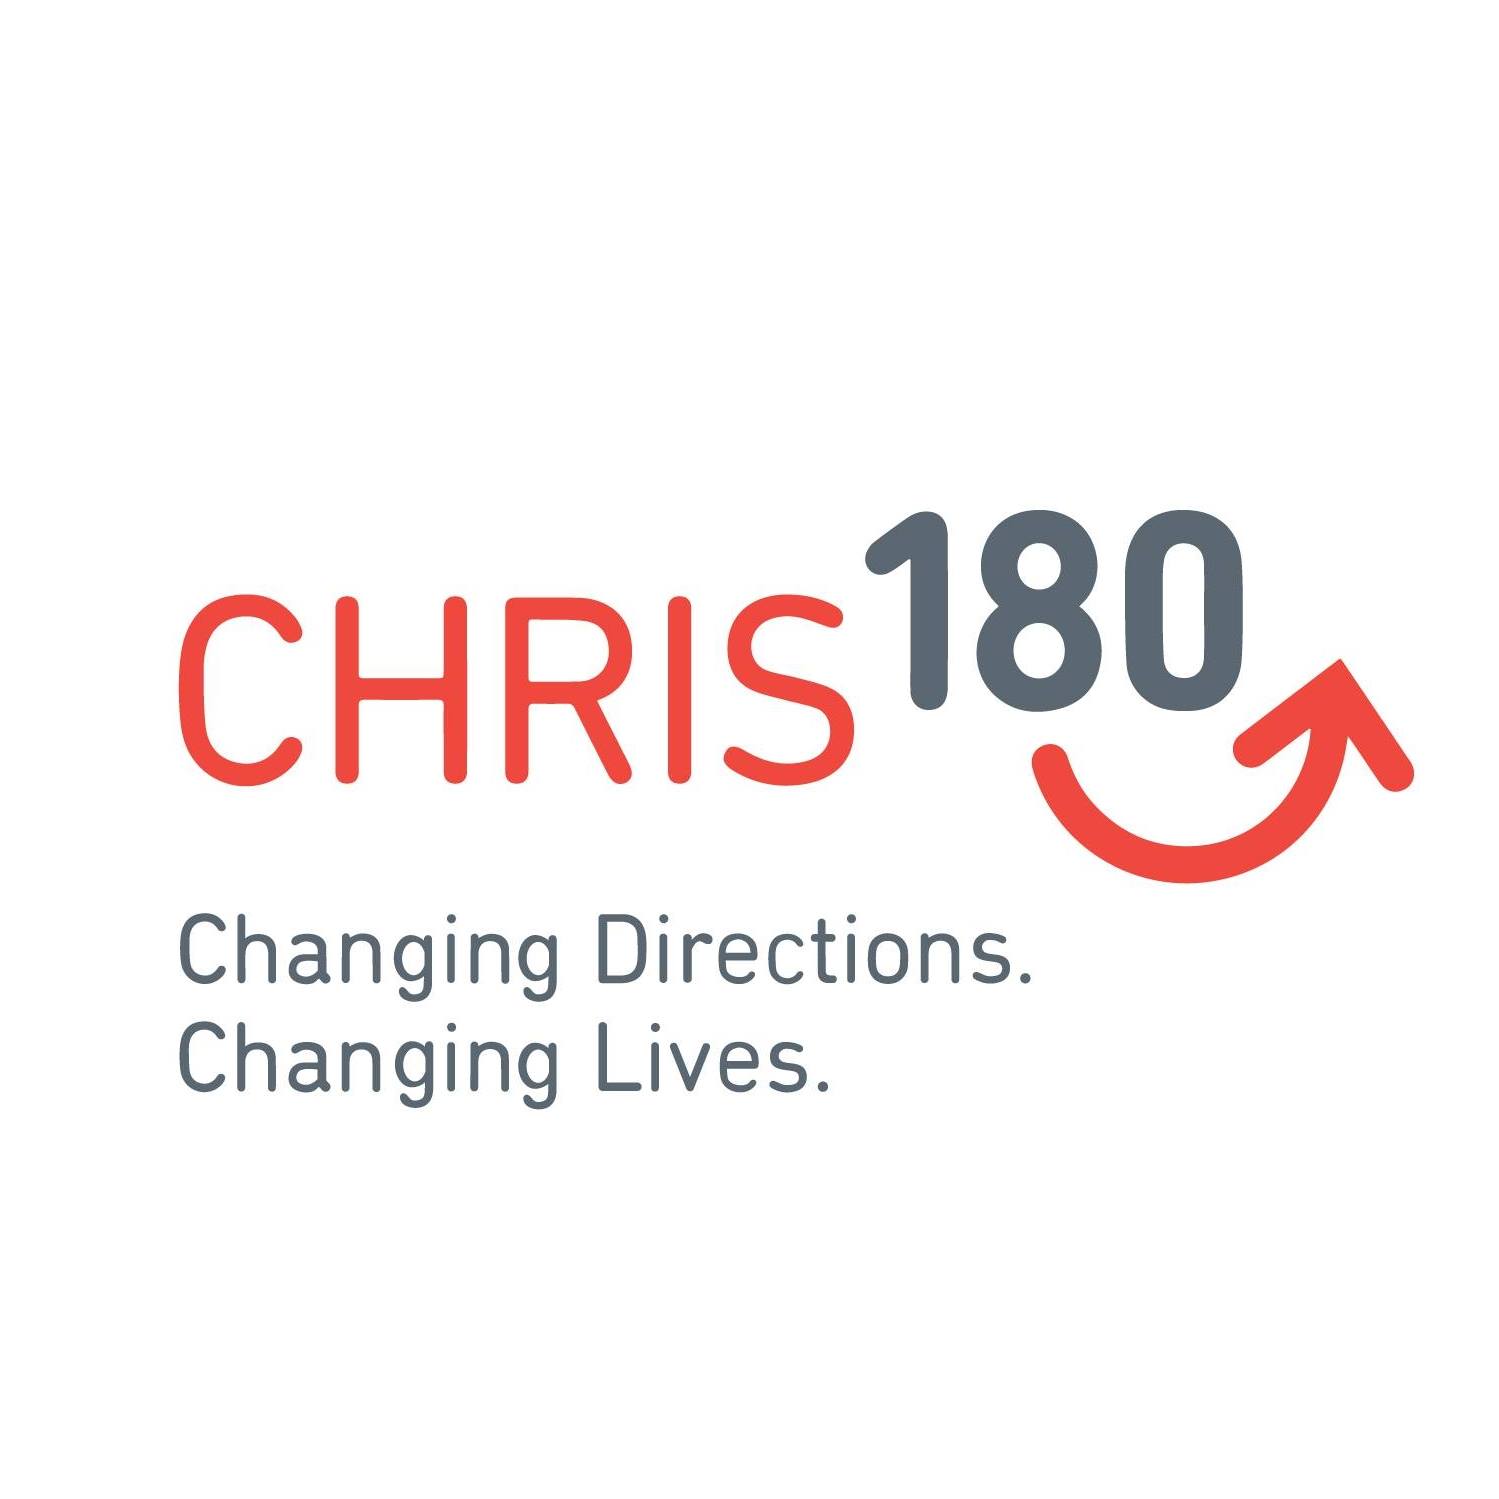 CHRIS 180